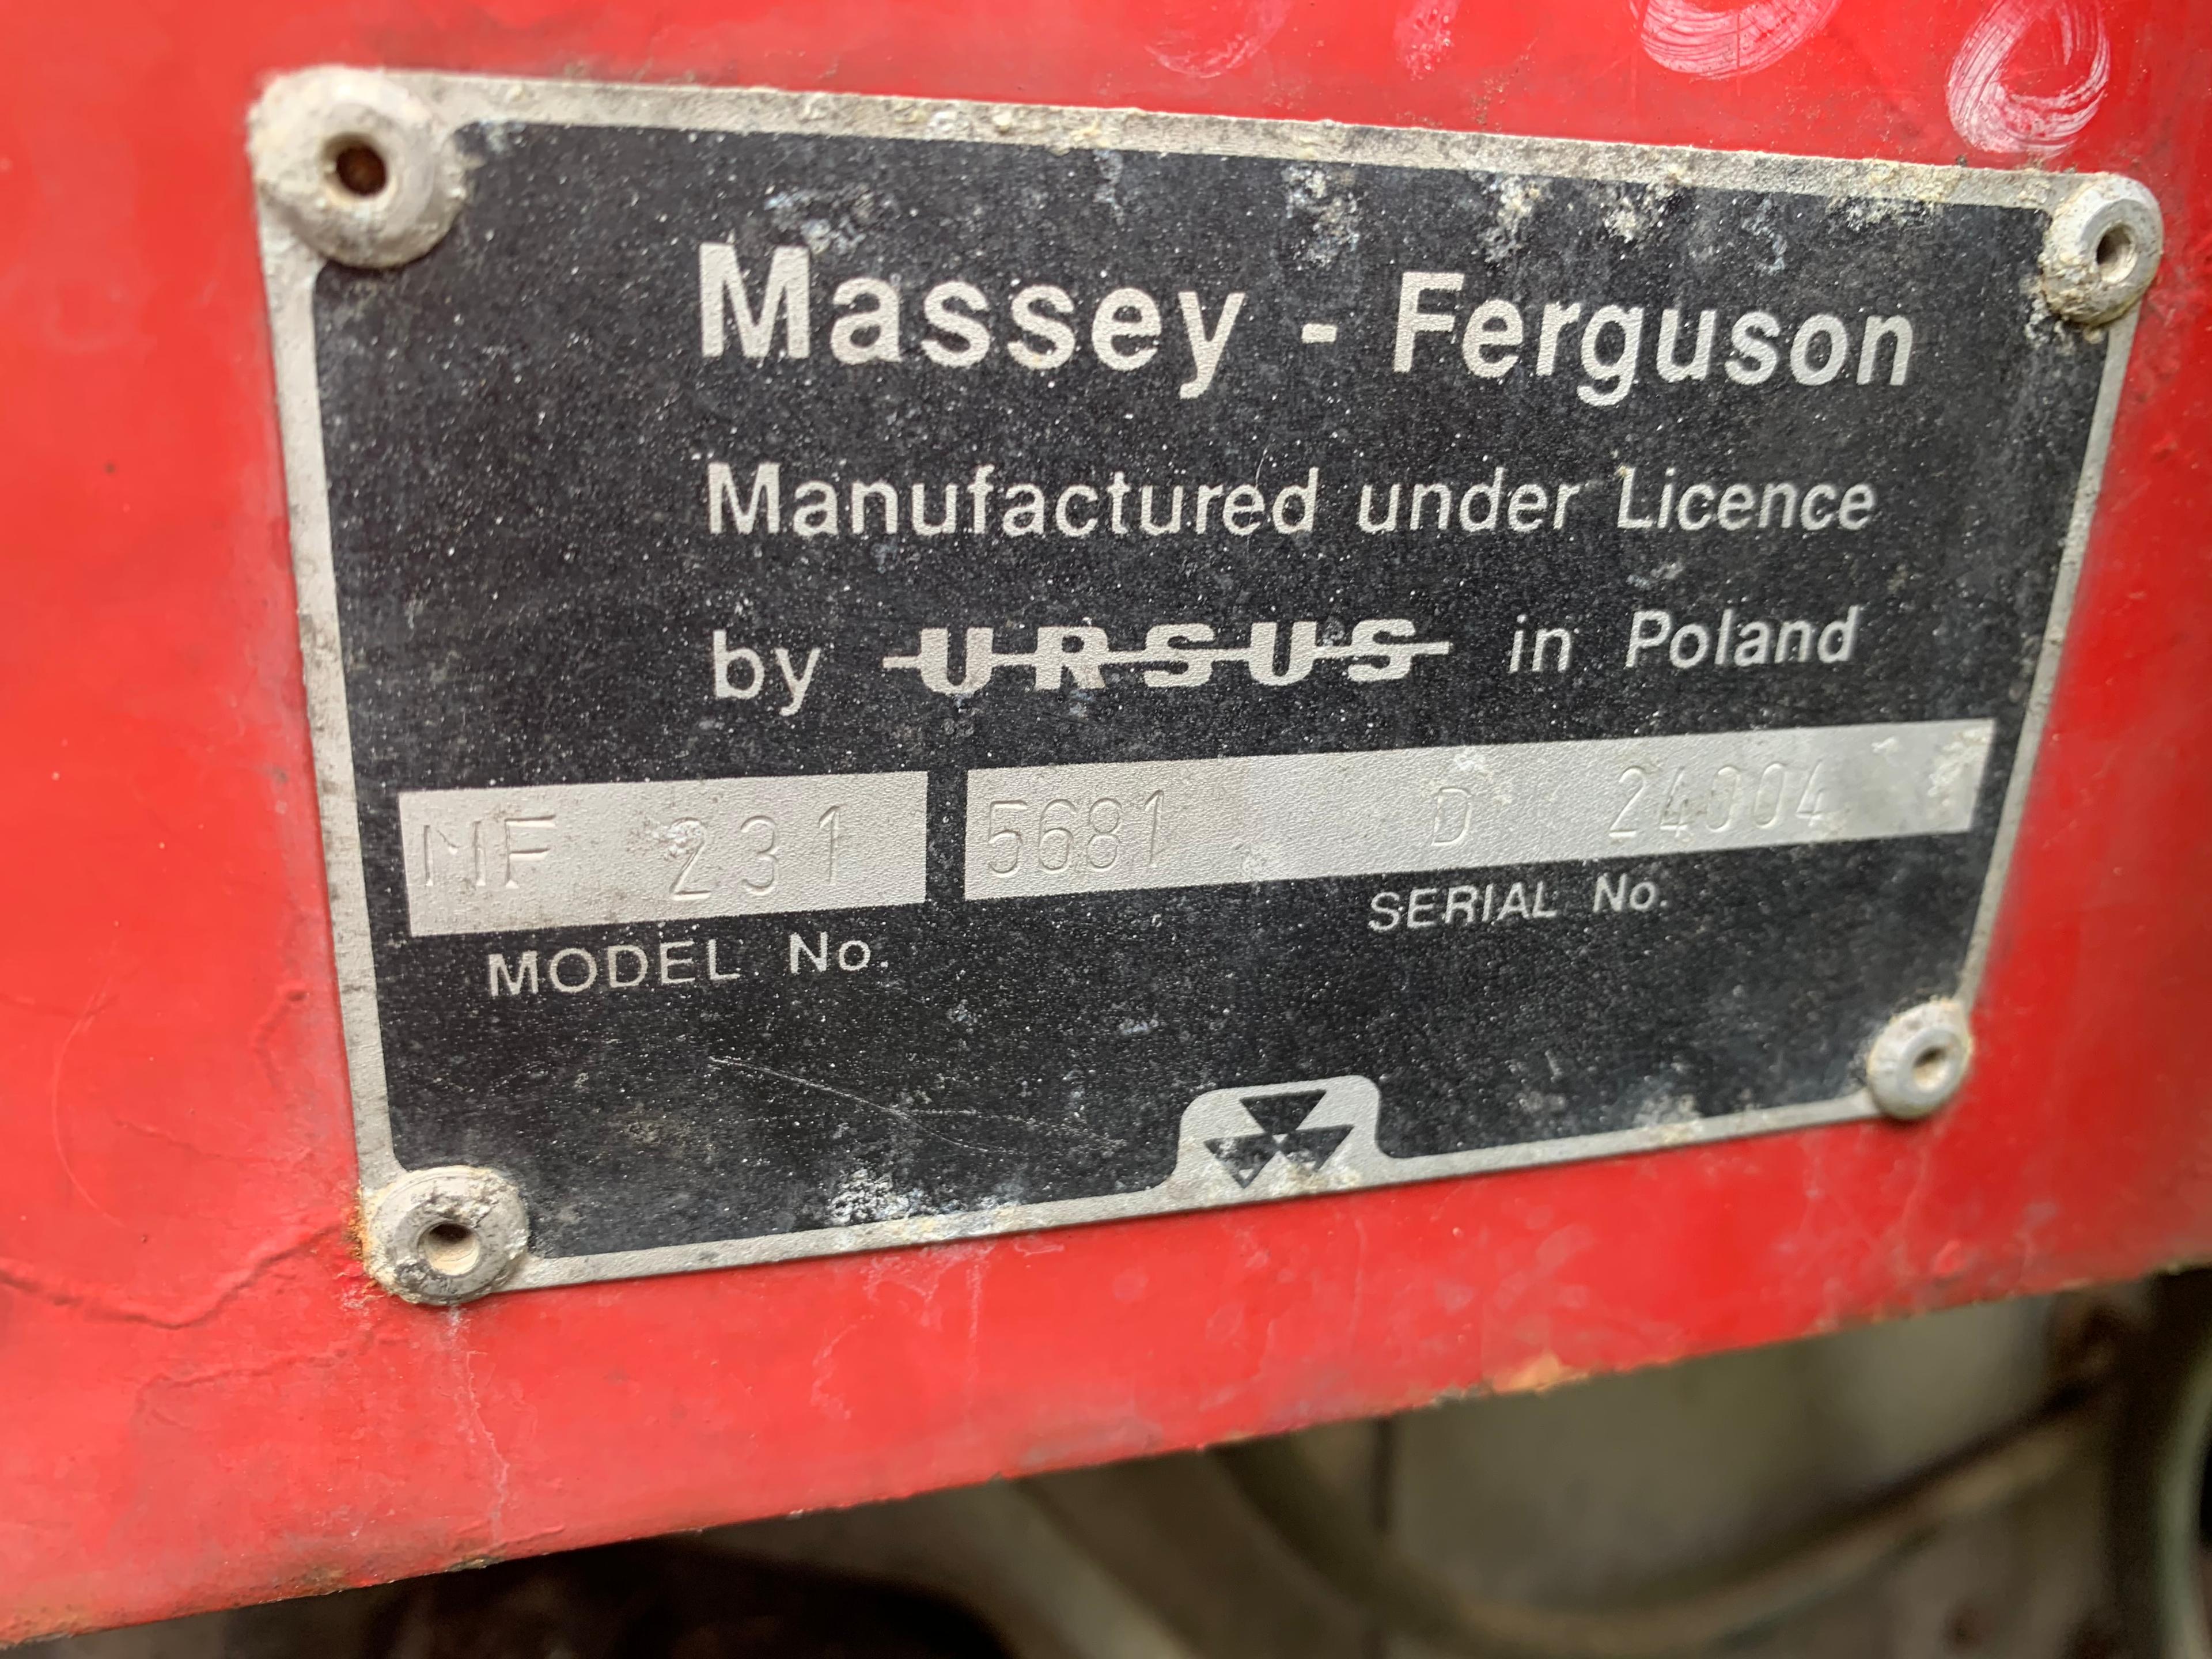 Massey Ferguson 231 Tractor 5681